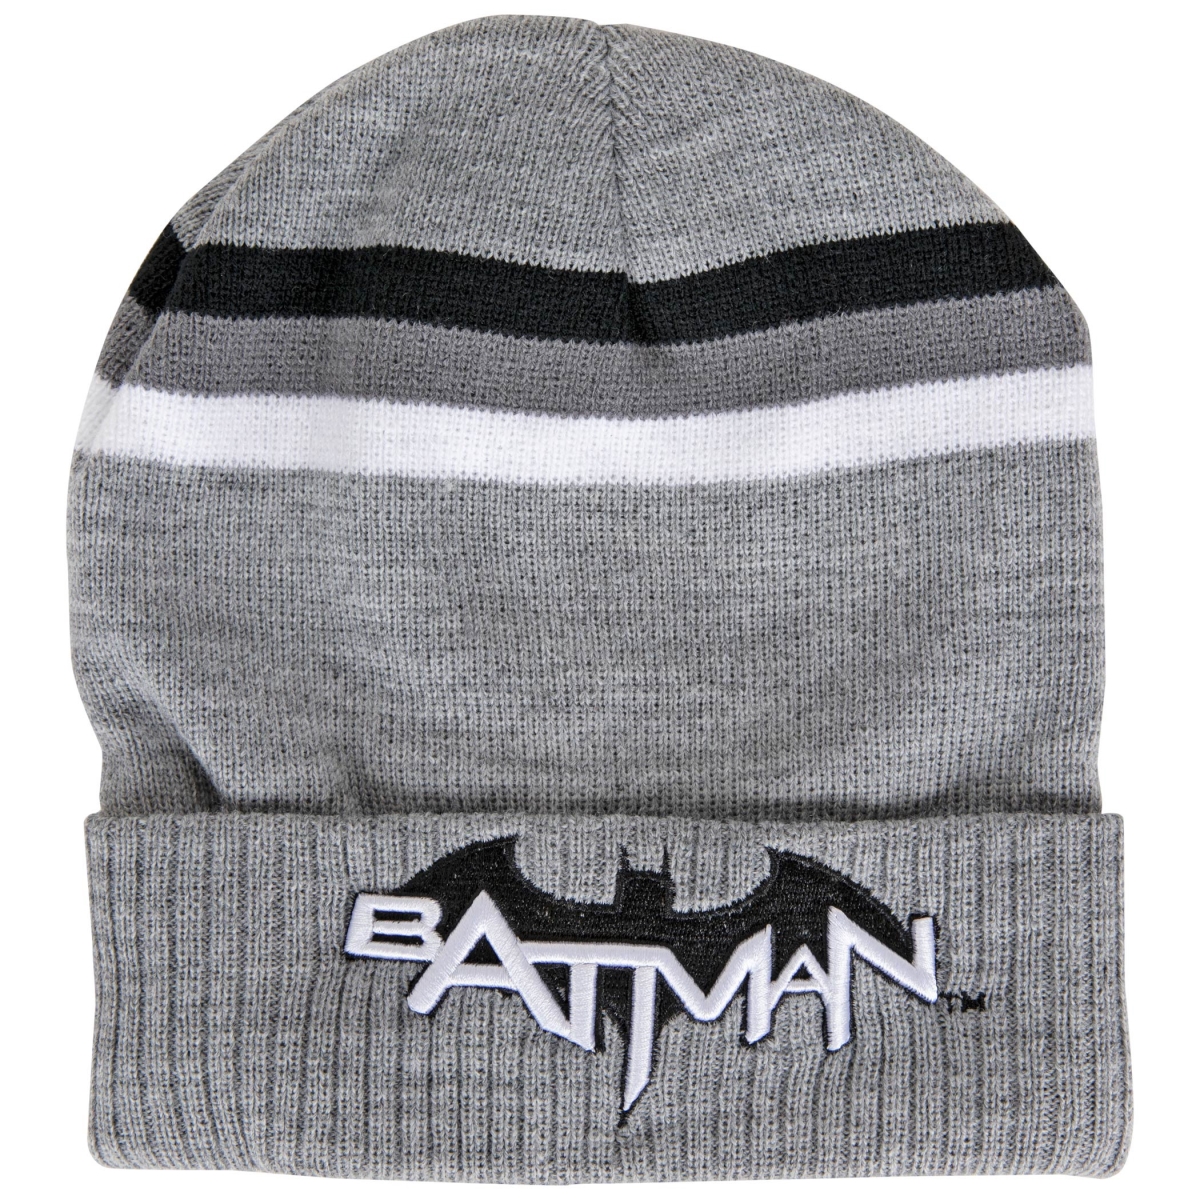 Picture of Batman 837251 DC Comics Bat Symbol & Text Striped Cuff Knit Beanie